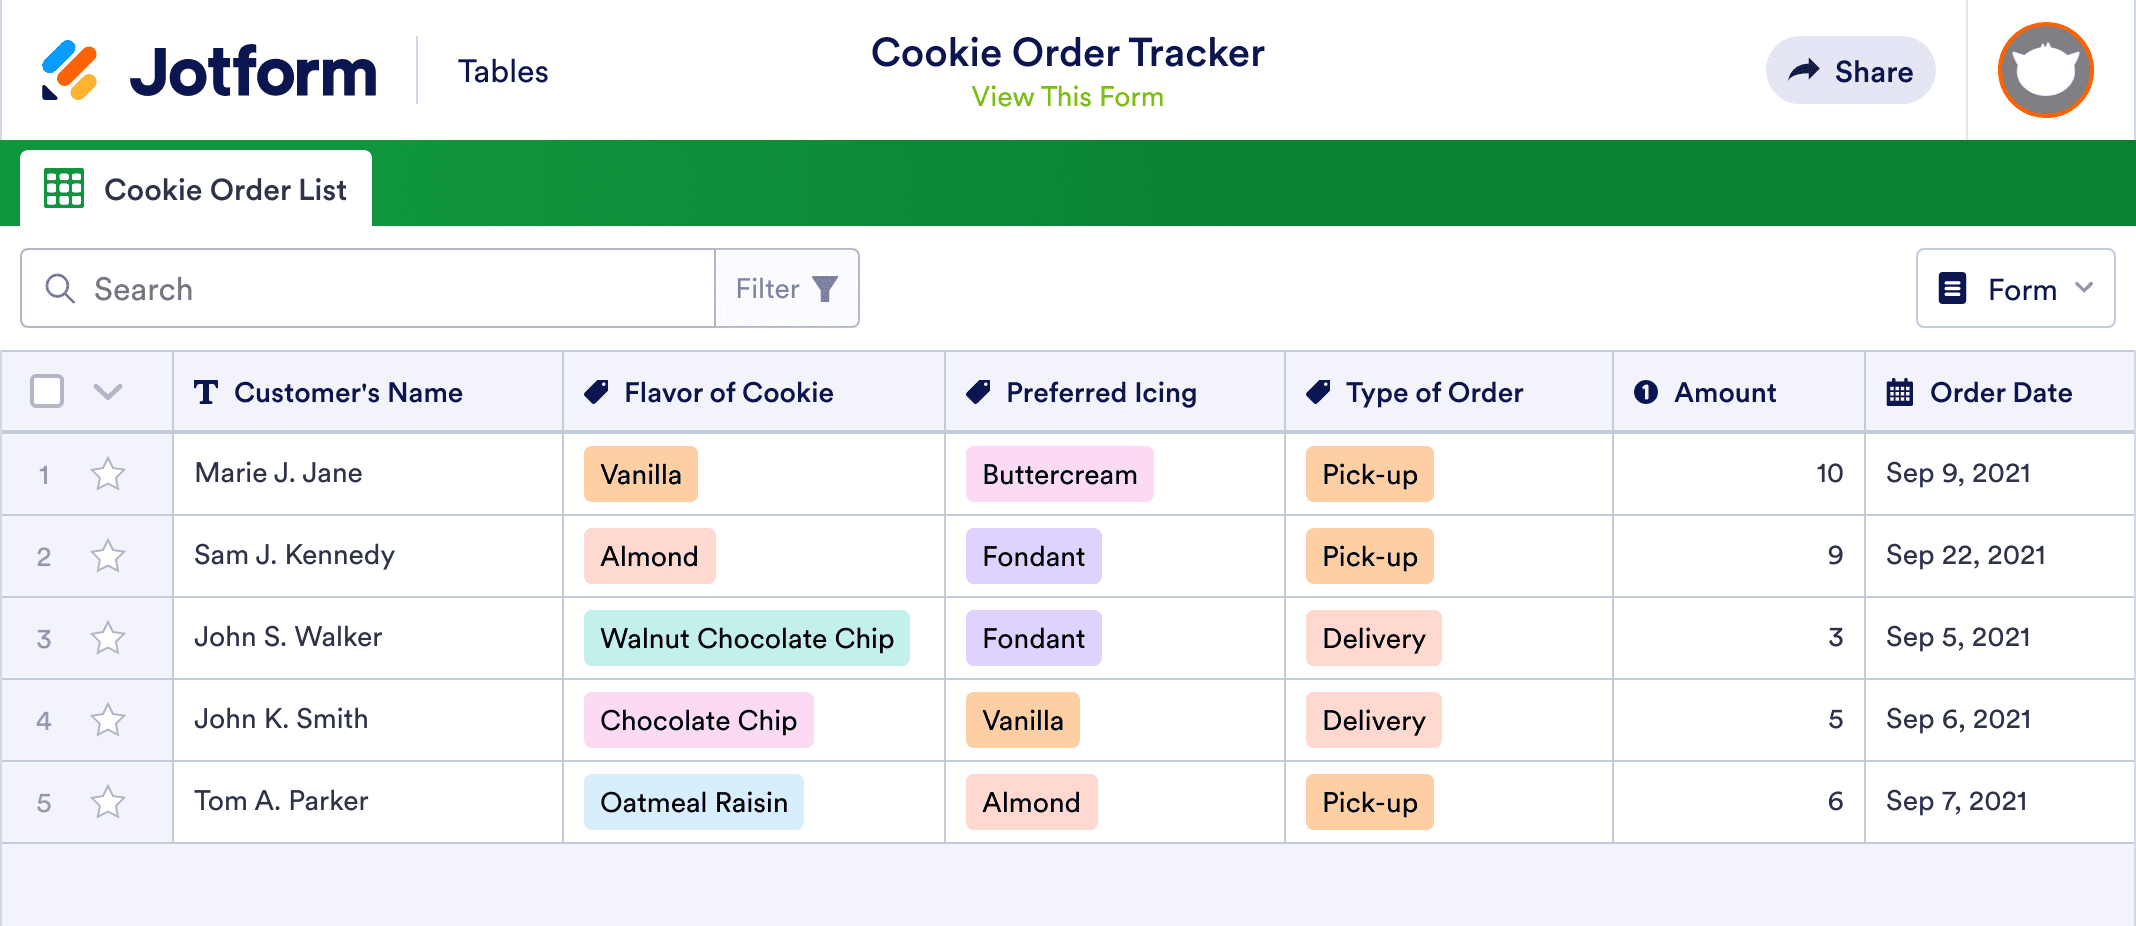 Cookie Order Tracker